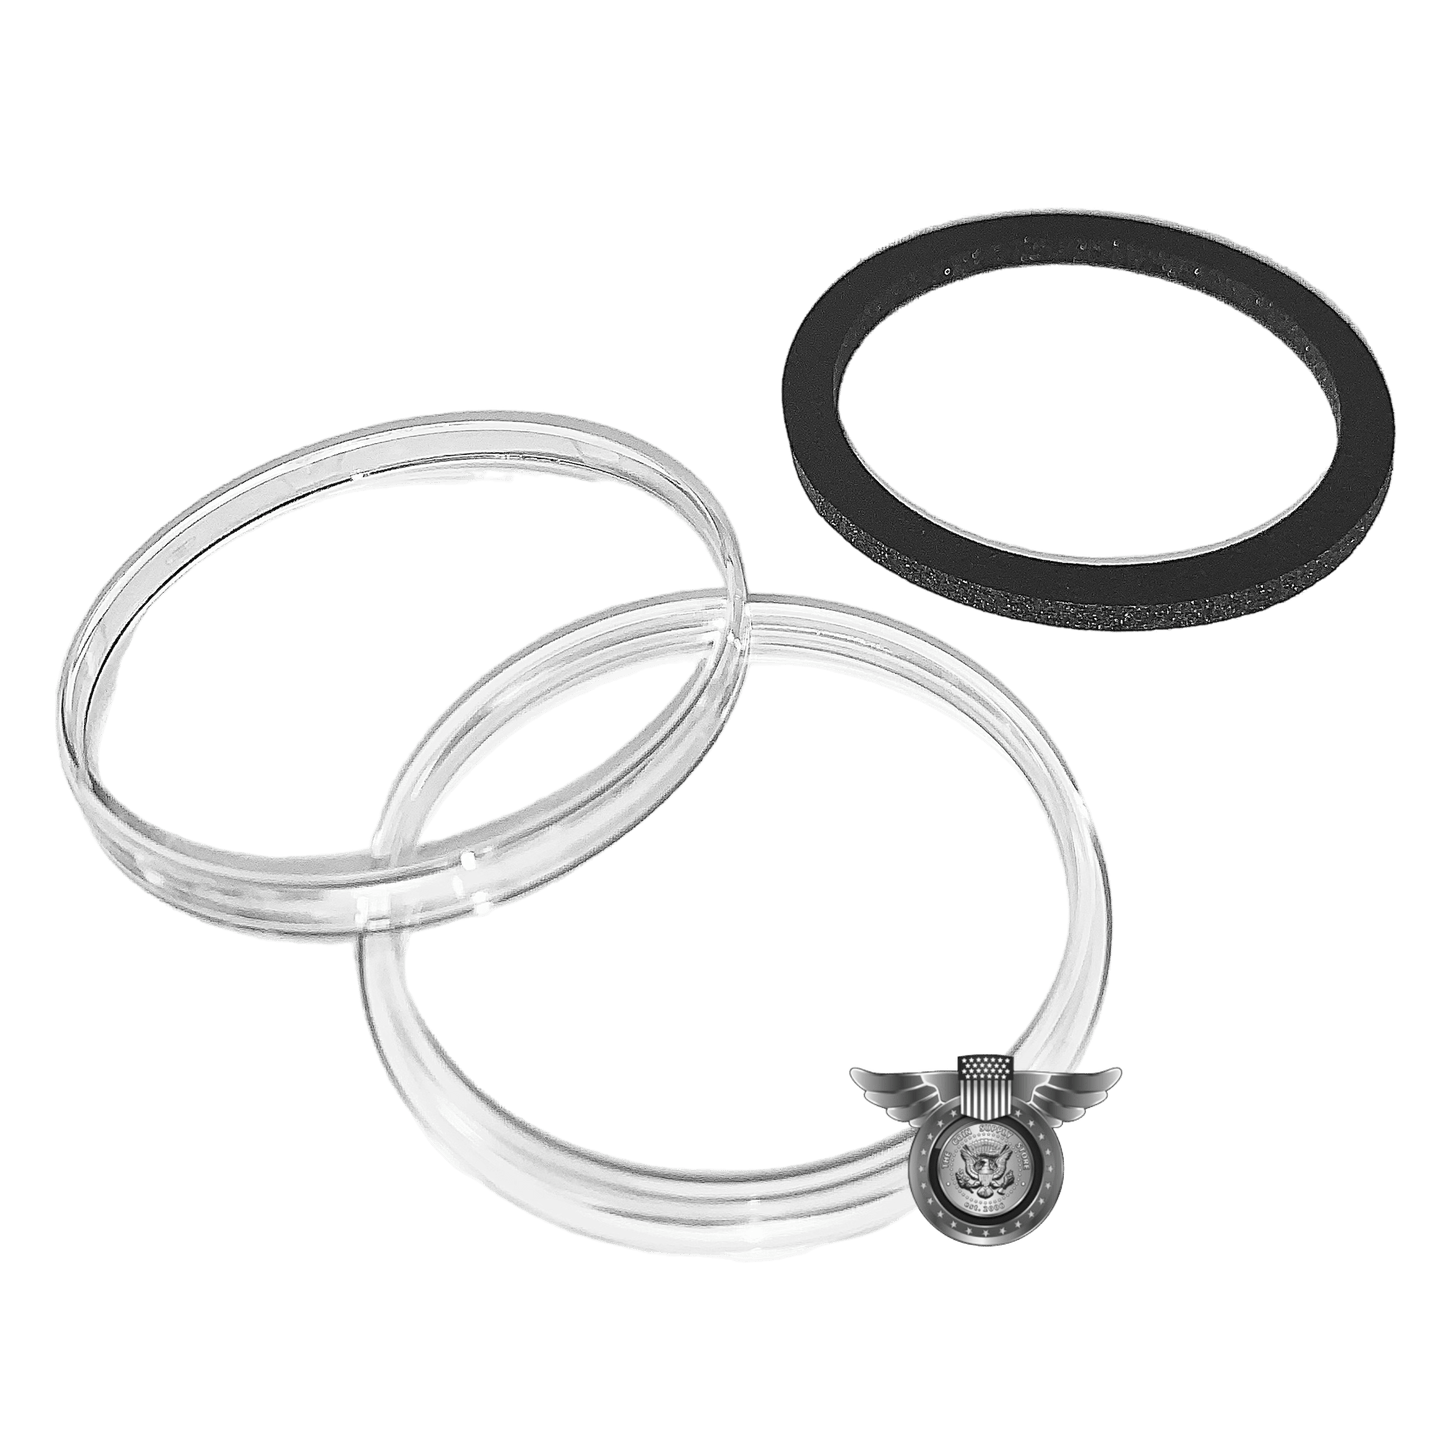 Ring Type Air-Tite Model I-Loop - 36mm Black (Ornament Holder)